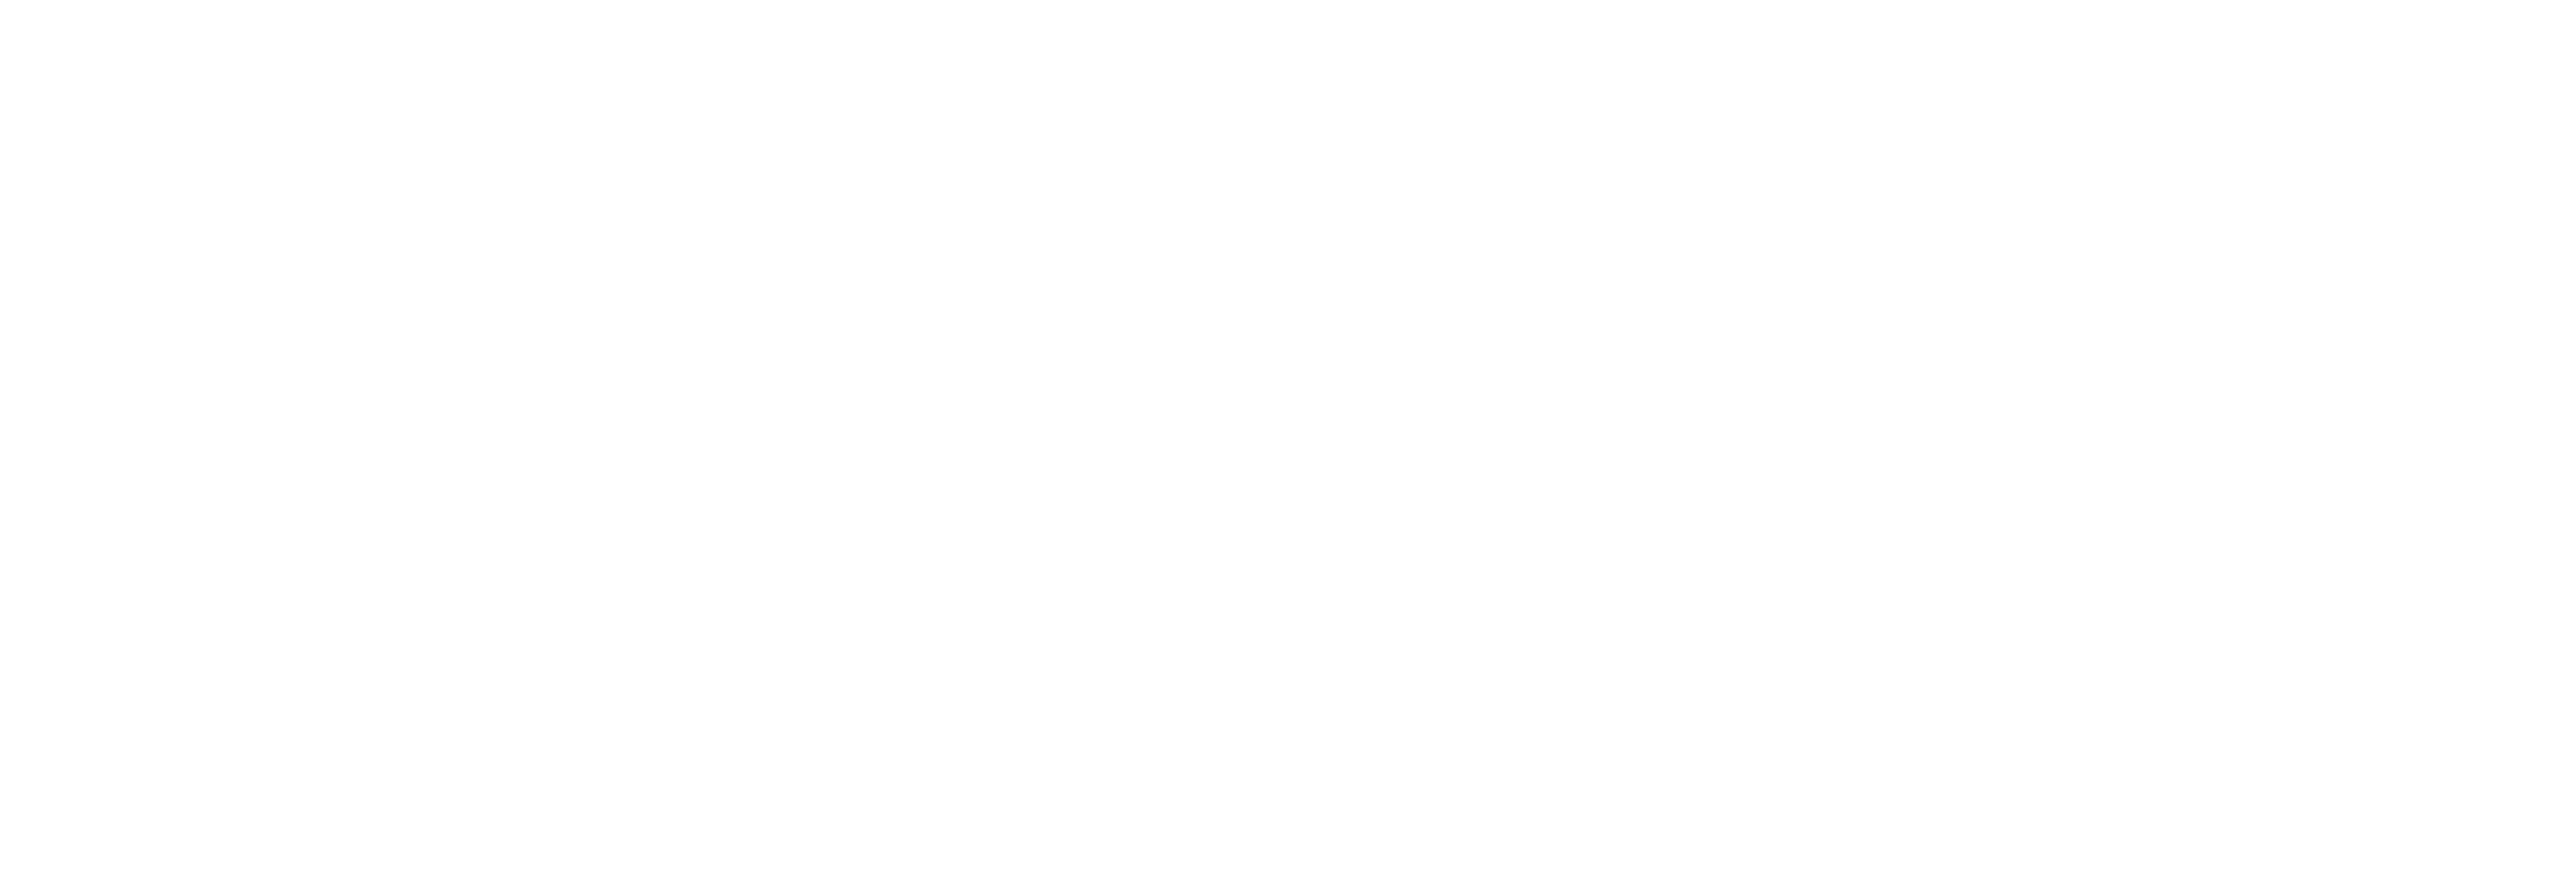 AniCura Tranbjerg Dyrehospital logo